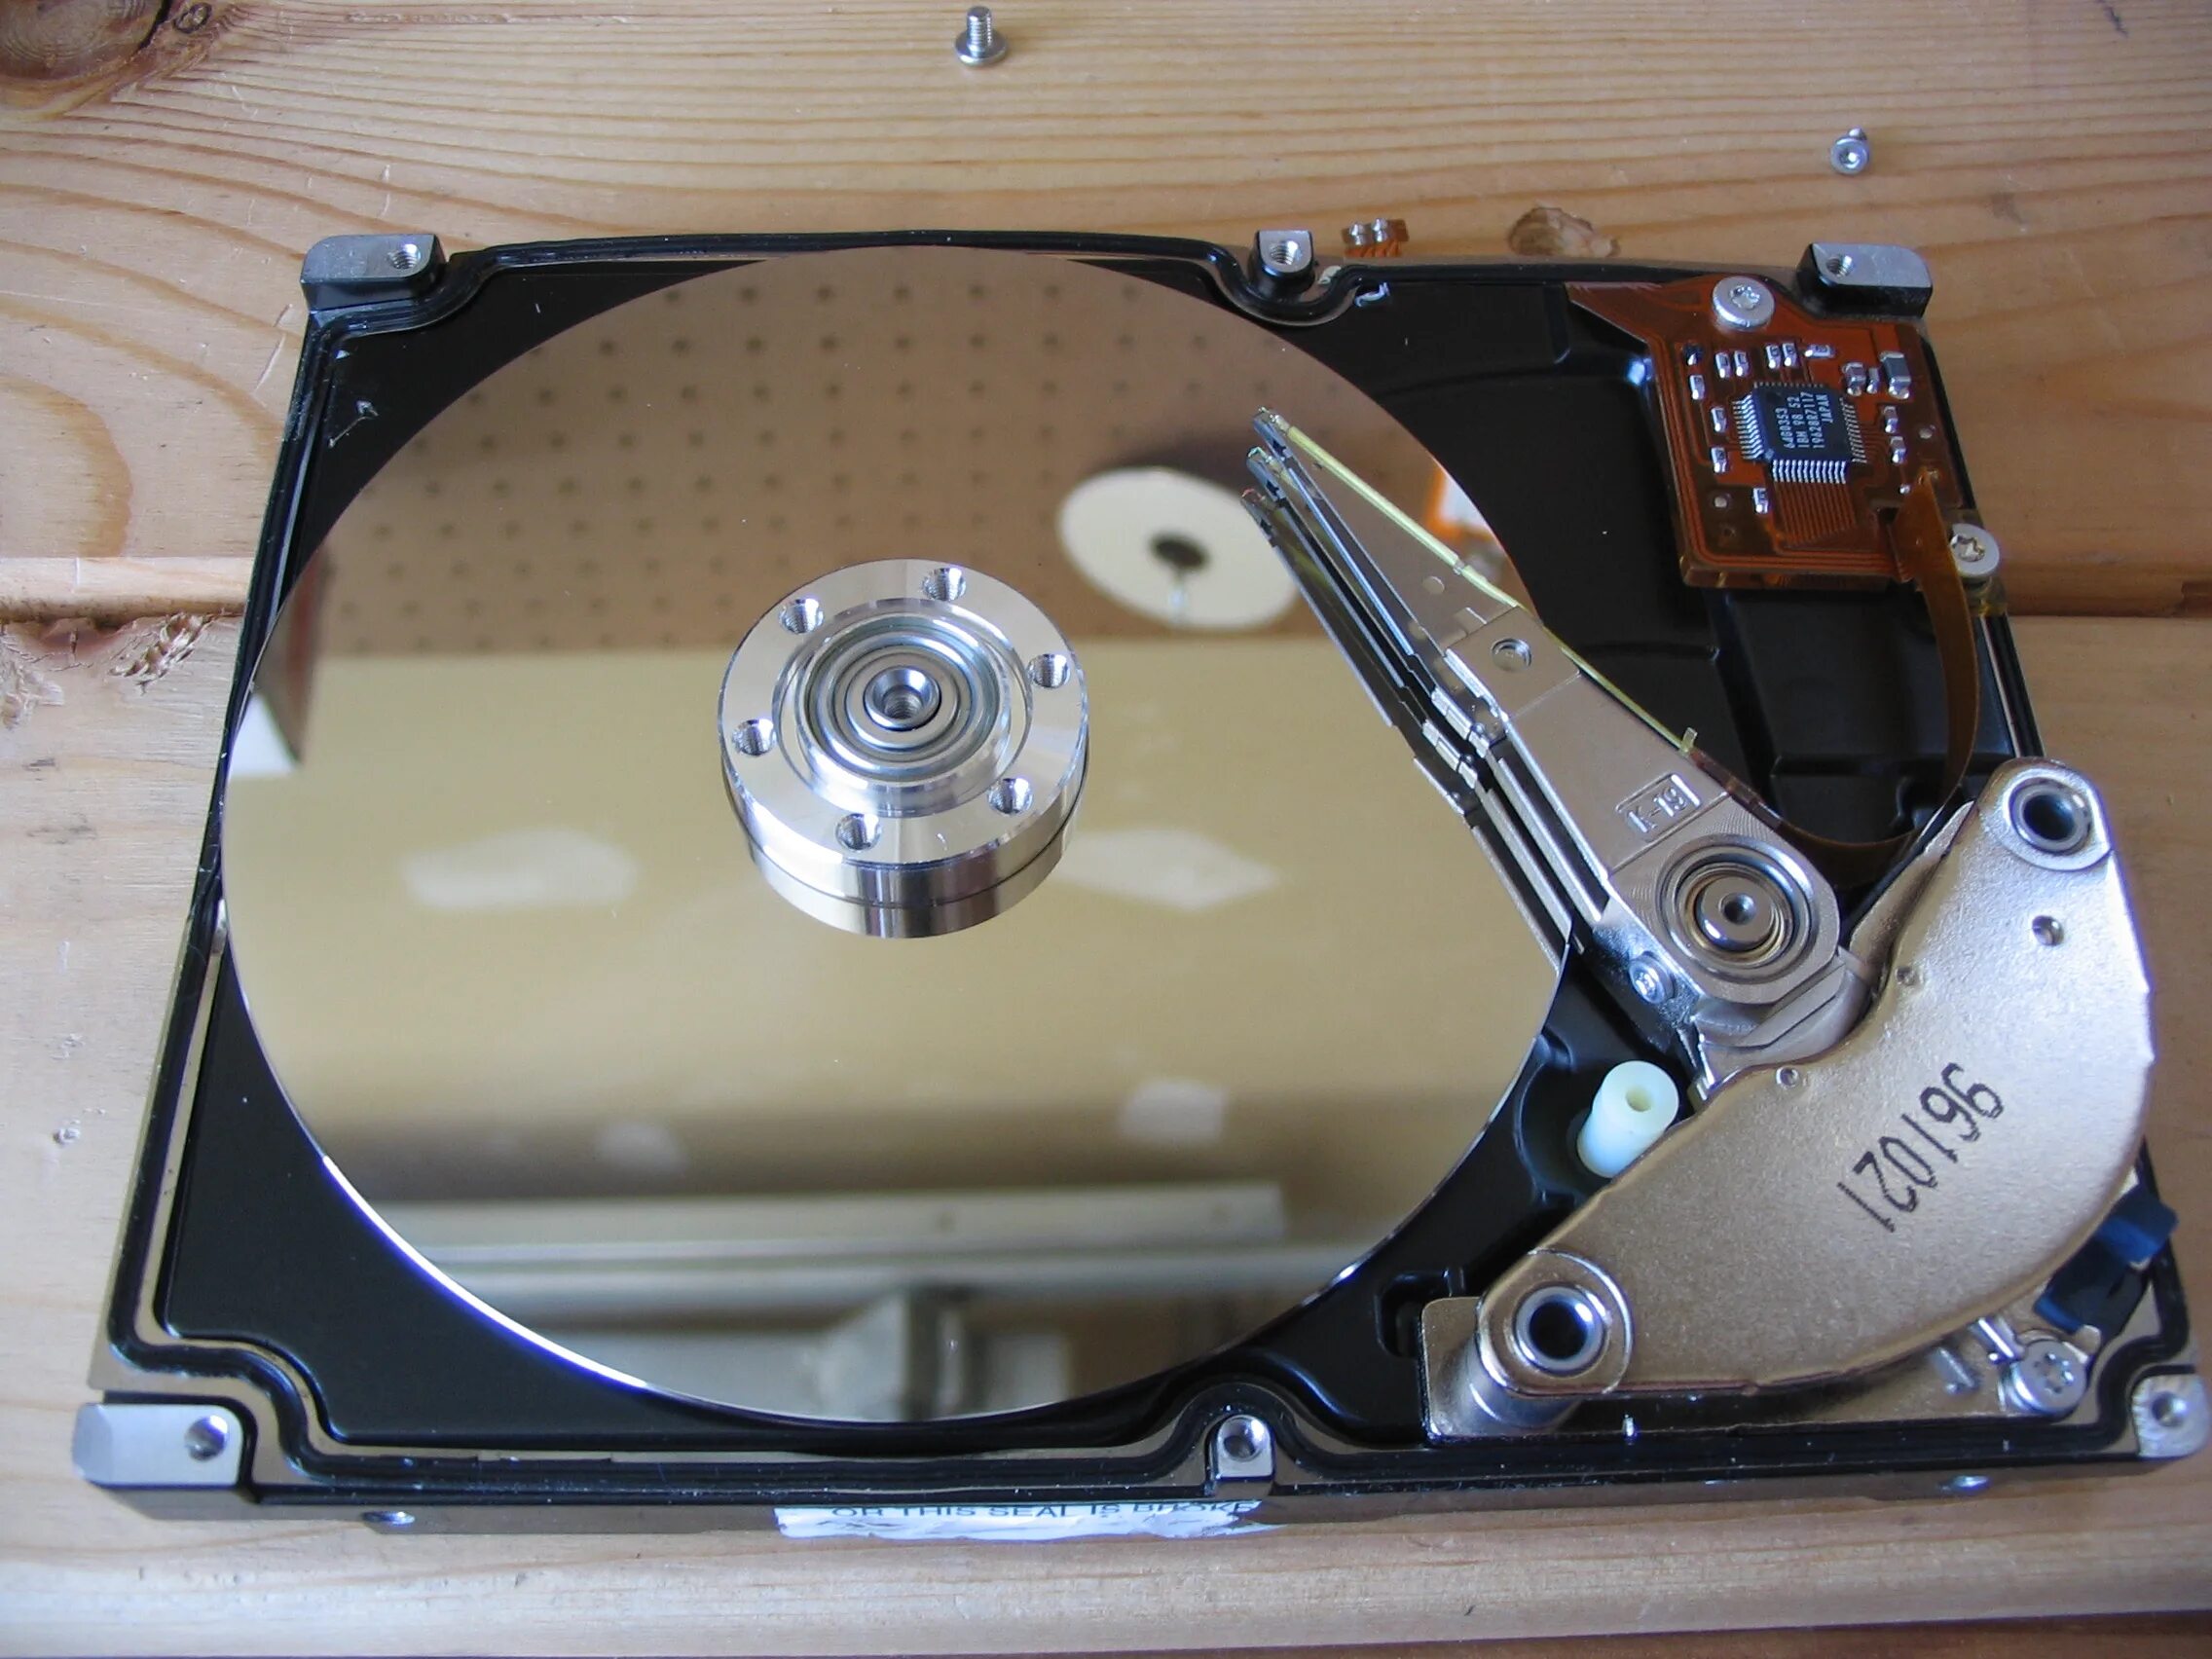 Жесткий диск открытый. HDD вскрытый. Жесткий диск покрытия. Жесткий диск с открытой крышкой.